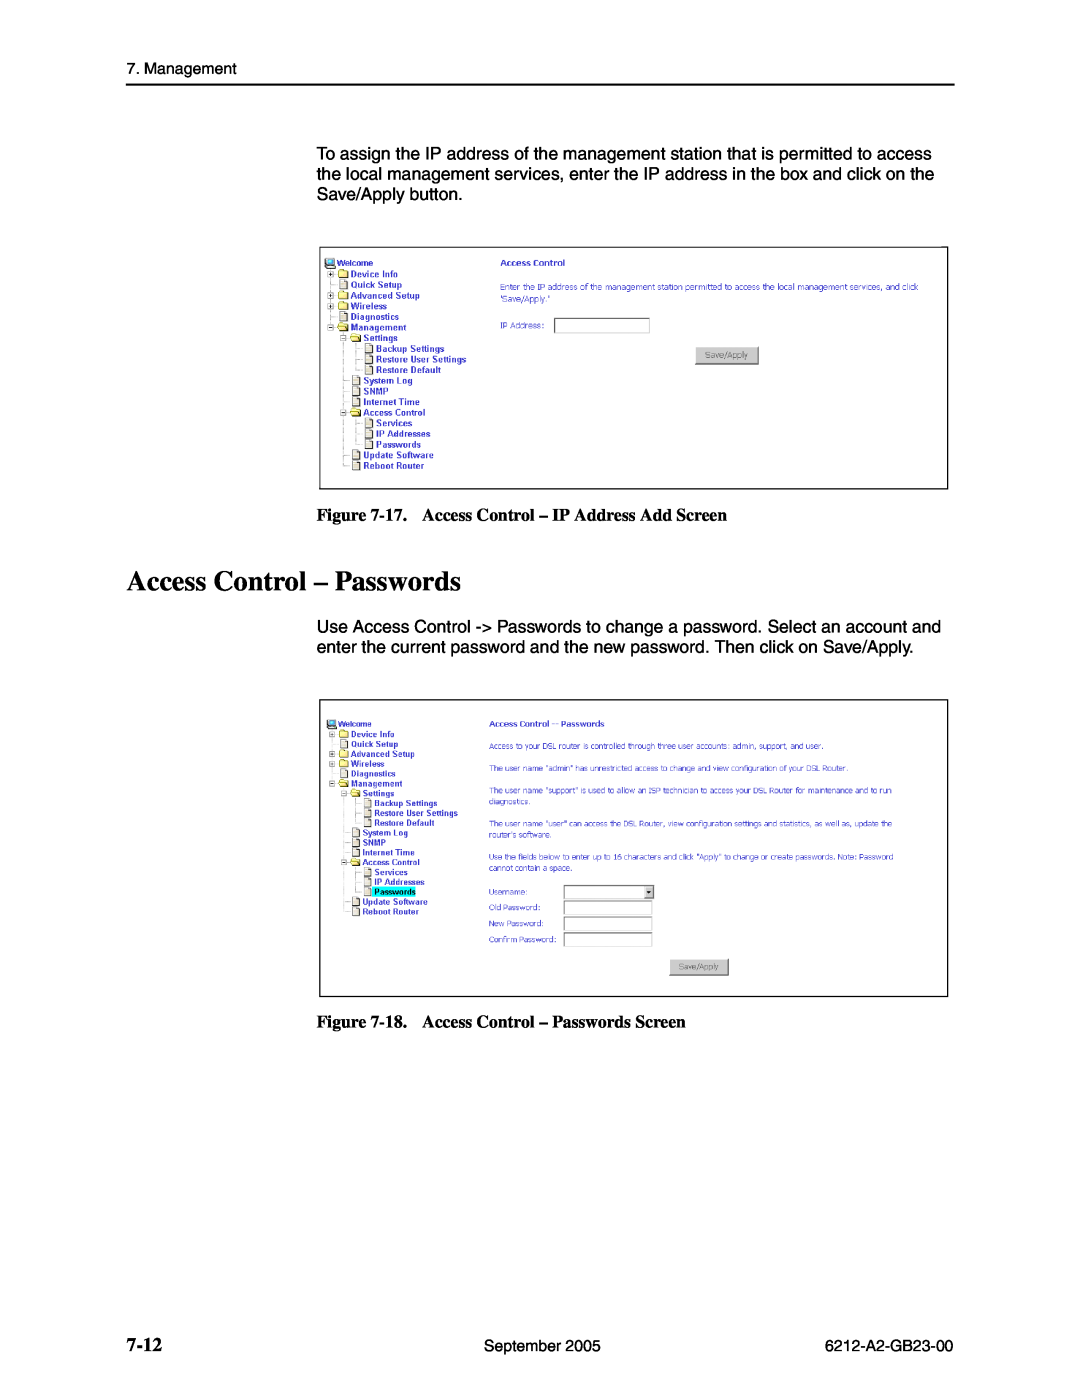 Paradyne 6212-I1 manual Access Control - Passwords, 7-12, 17. Access Control - IP Address Add Screen 